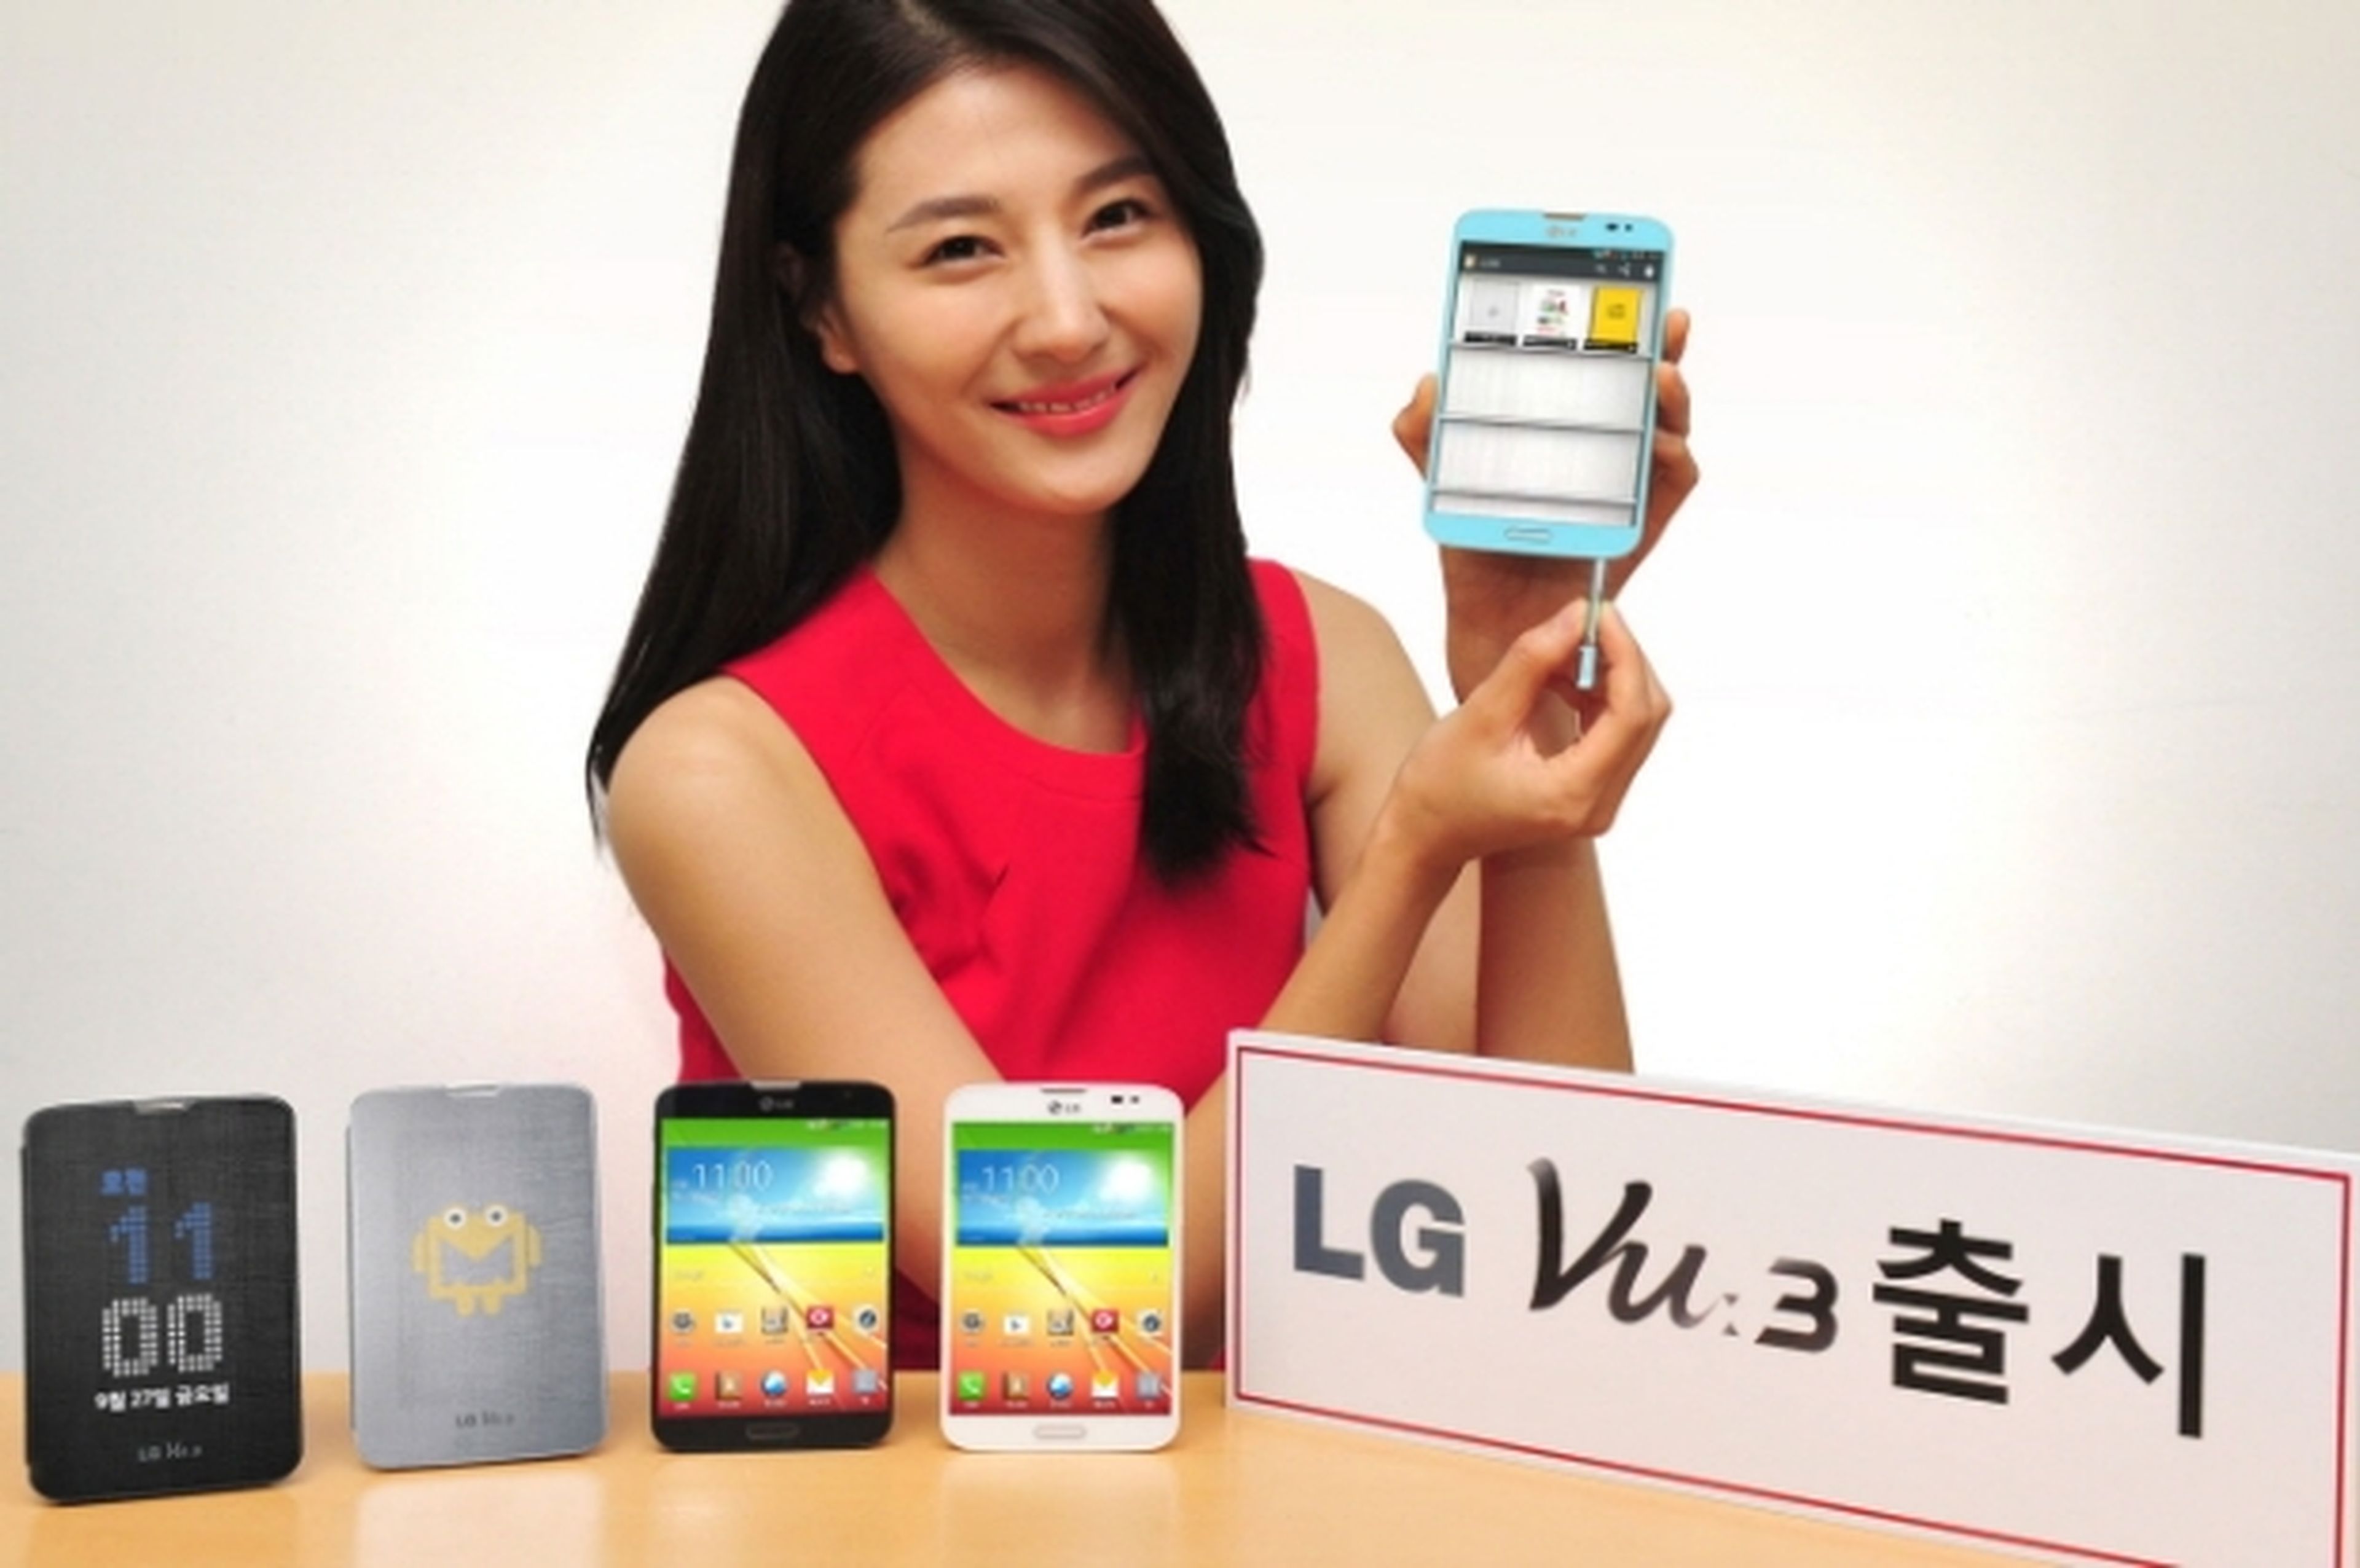 LG Vu 3, el smartphone con pantalla 4:3, es oficial